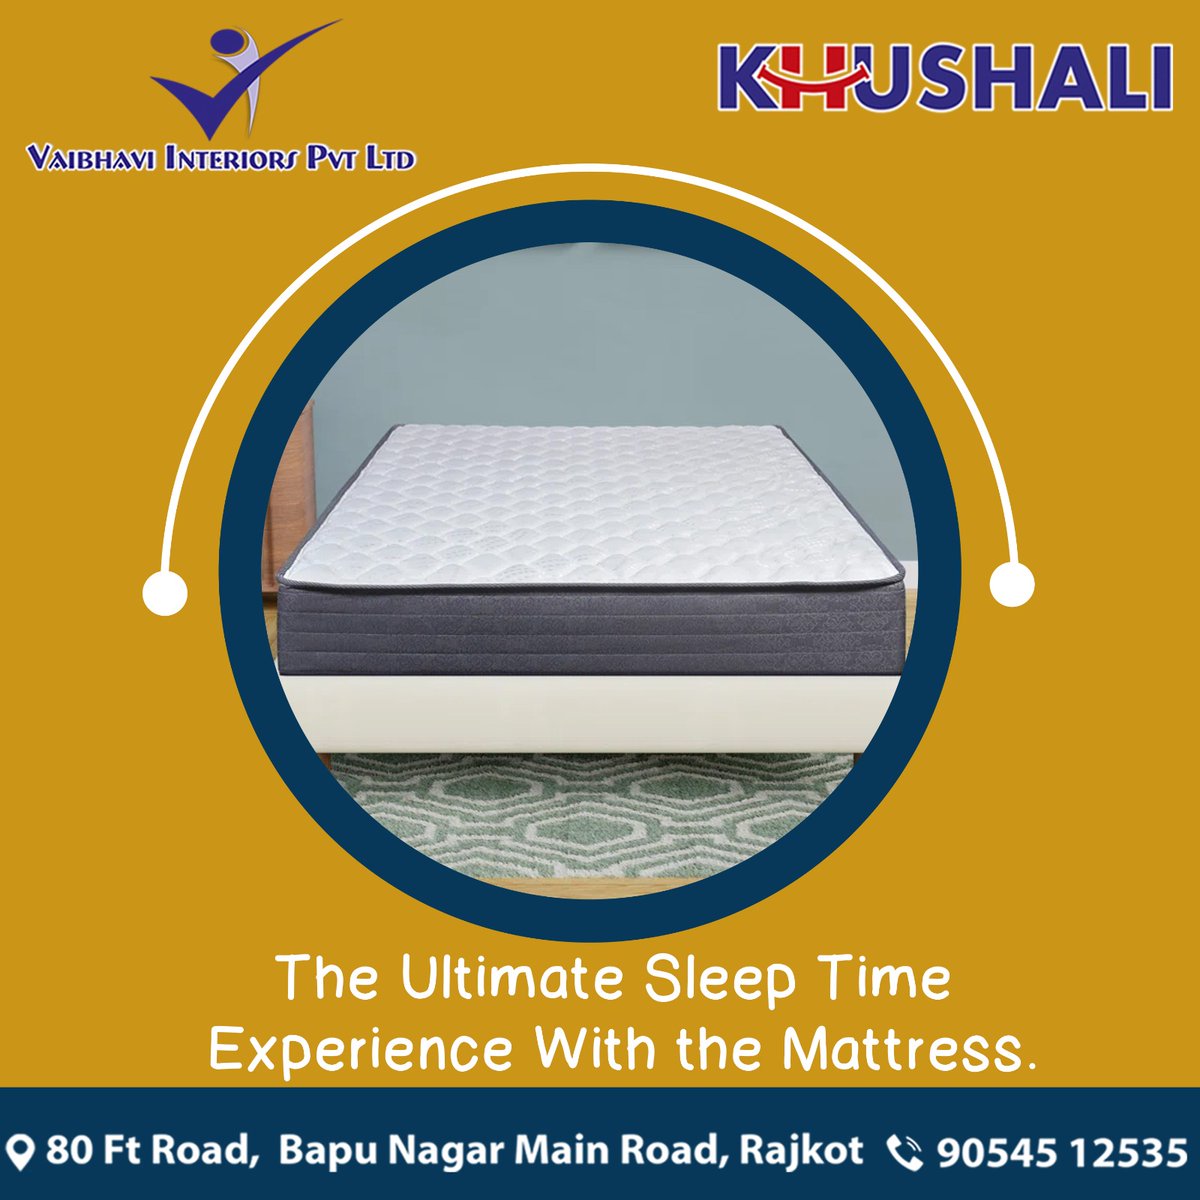 Our mattresses that ensure a good sleep.
Buy our mattress.
.
.
.
#vaibhaviinteriorpvtltd #mattress #vaibhavi #interior #khushali #happineshome #softmattress #bed #bedroom #15years #sleepbetterlivebetter #sleepbetter #SleepBetterFeelBetter #bedmattress #retailinteriors #Retailor